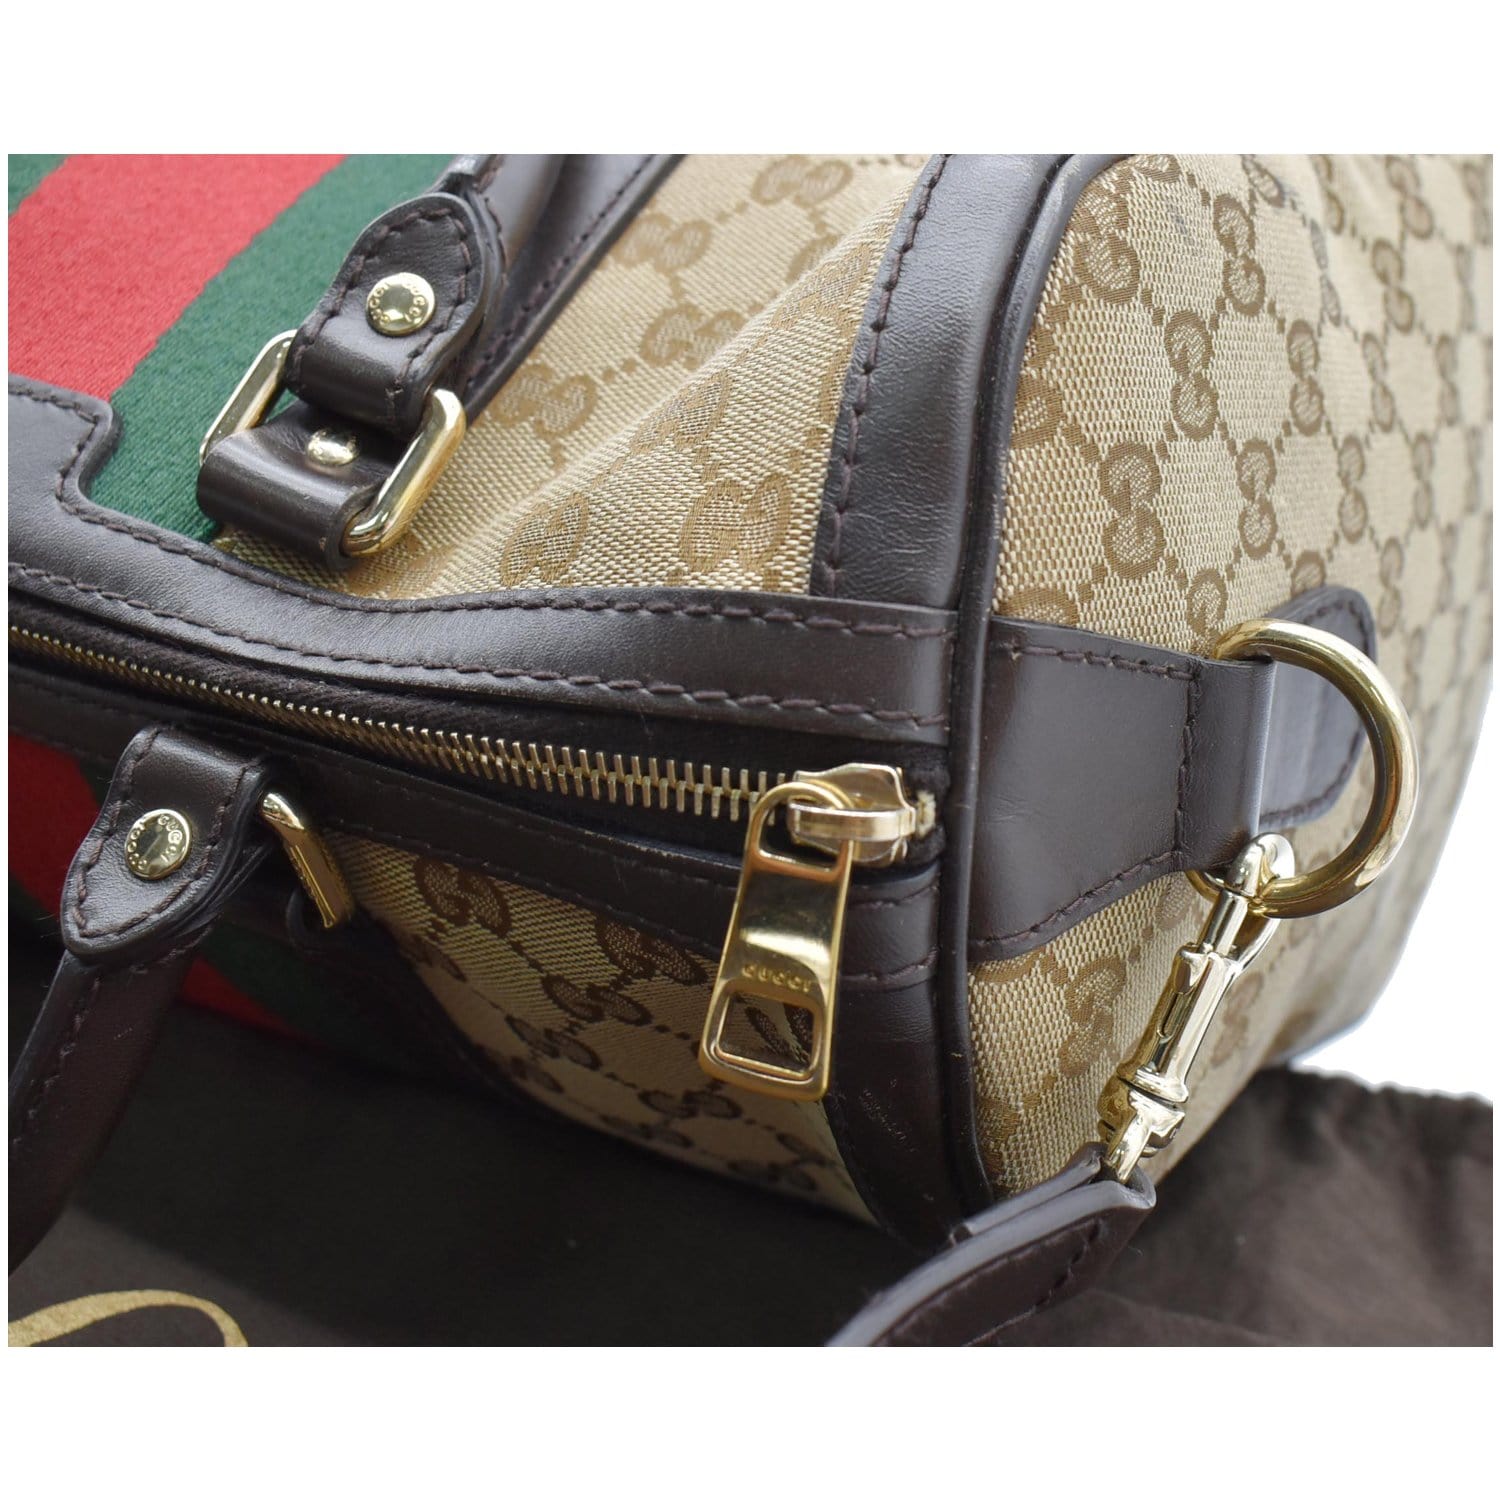 Vintage Louis Vuitton, Gucci, Chanel Handbags & Jewelry Lookbook by SHOPBOP  - NAWO